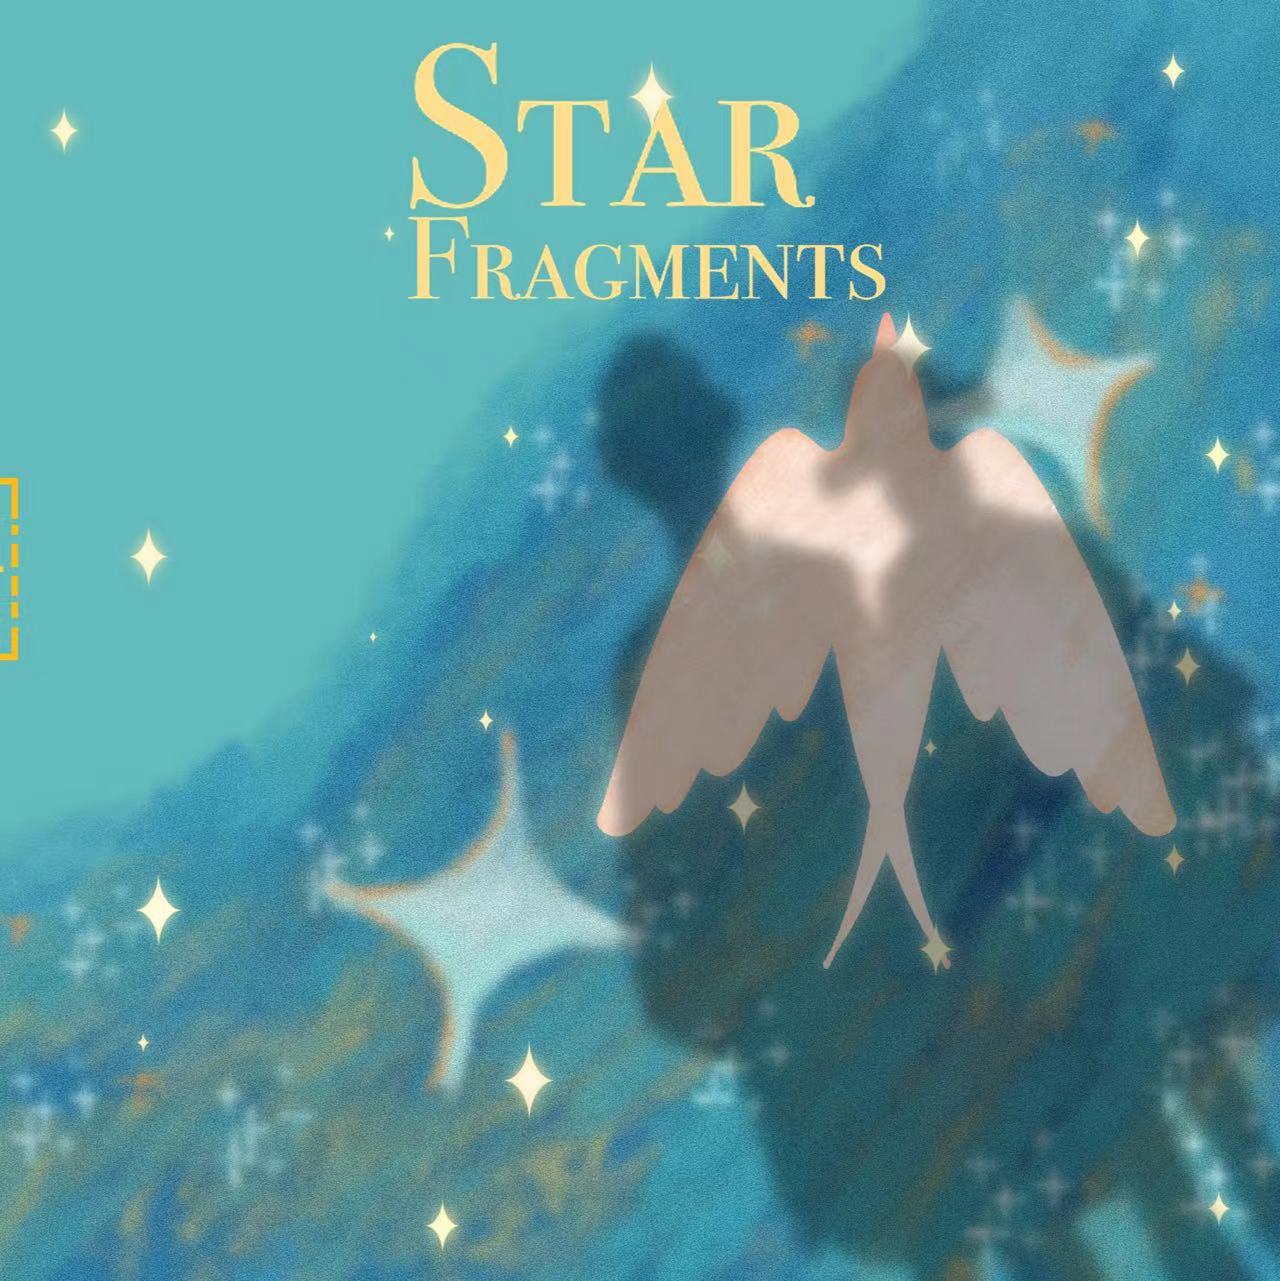 疑犯追踪POI 现 fragment星星碎片 Star